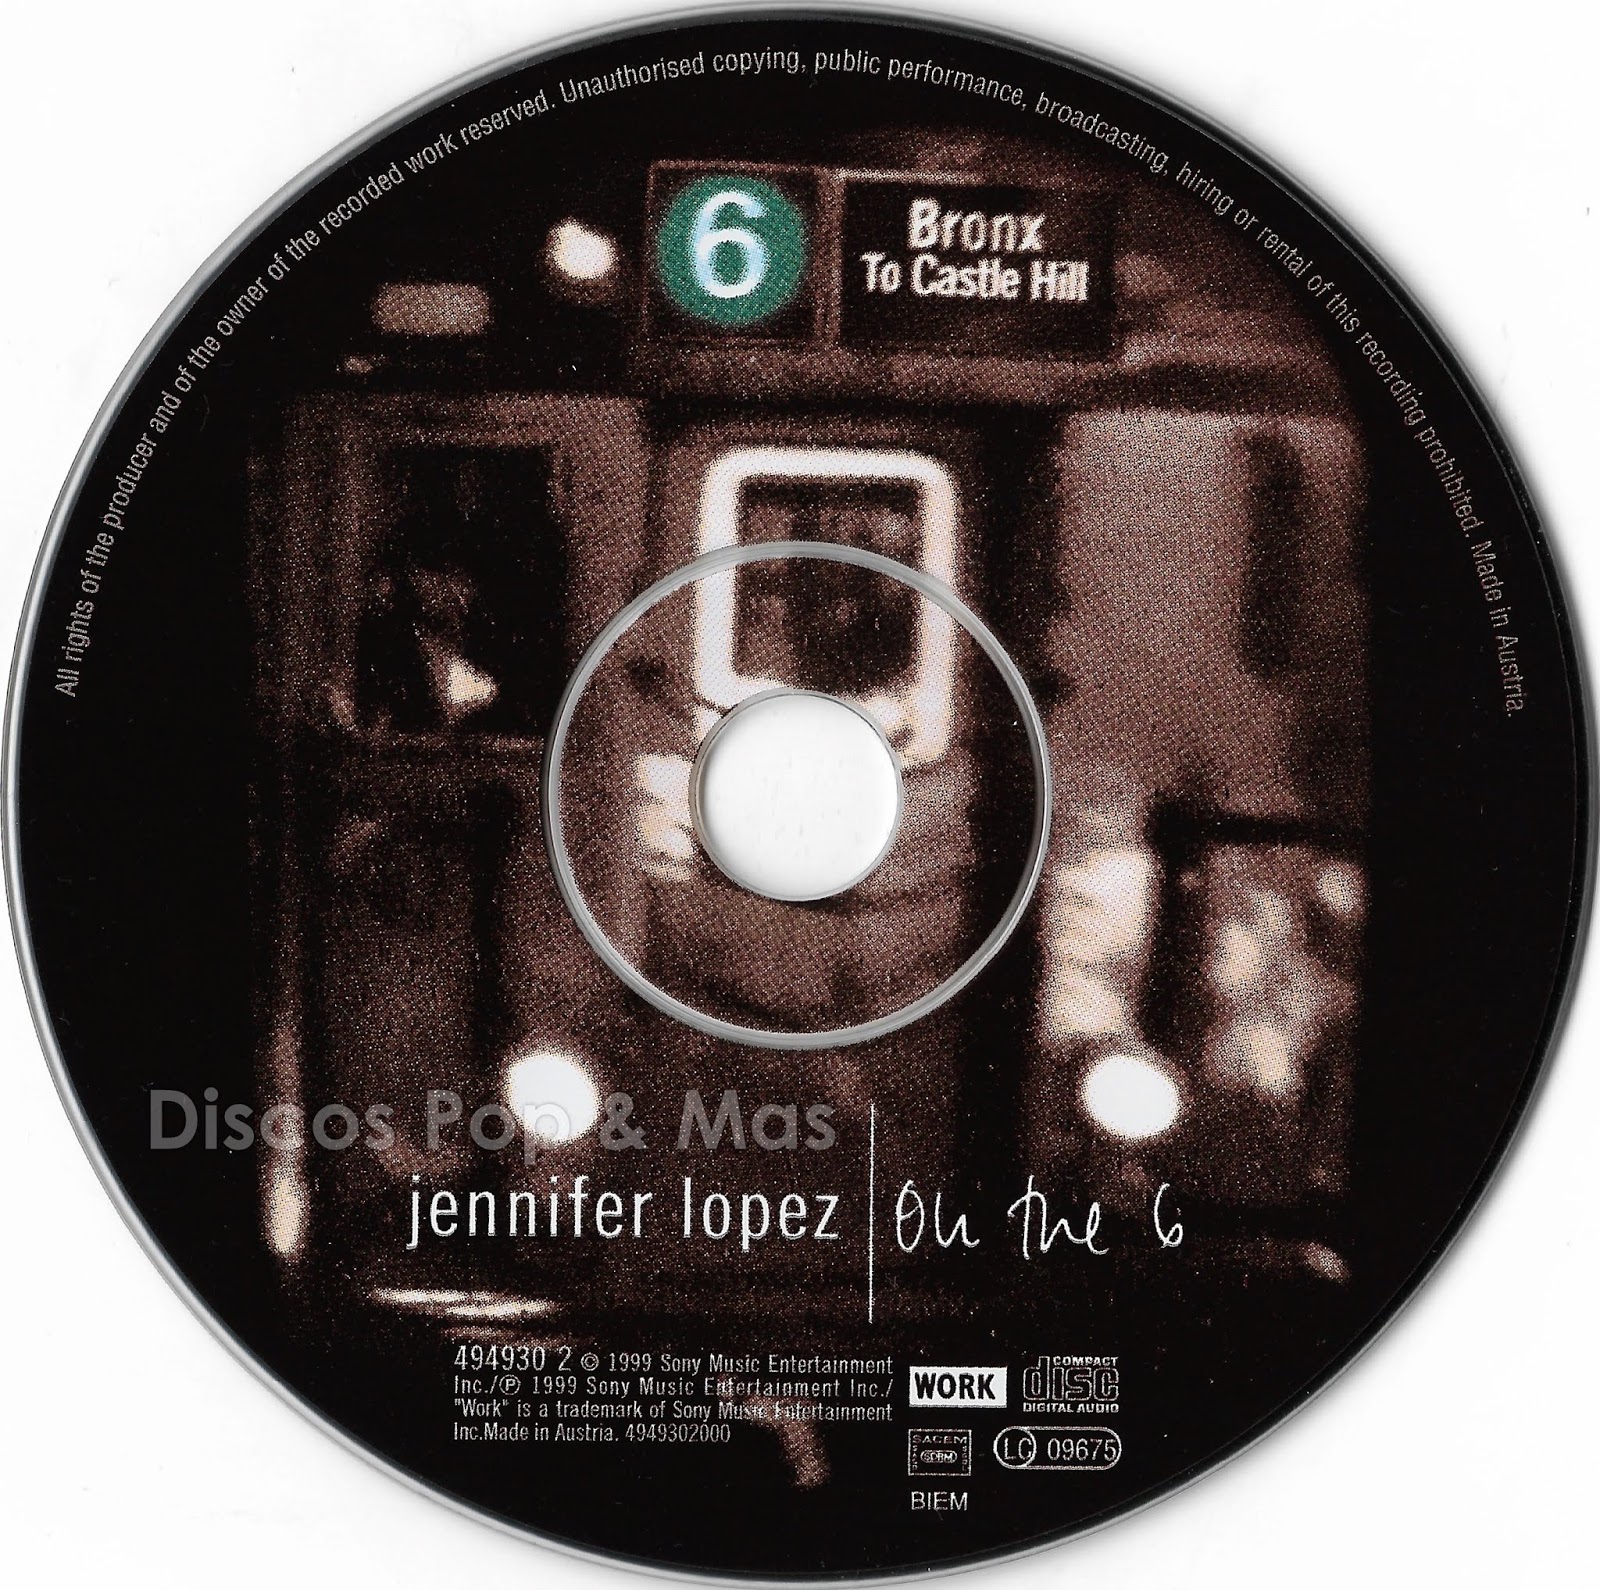 Discos Pop & Mas: Jennifer Lopez - On the 6 (International Edition)